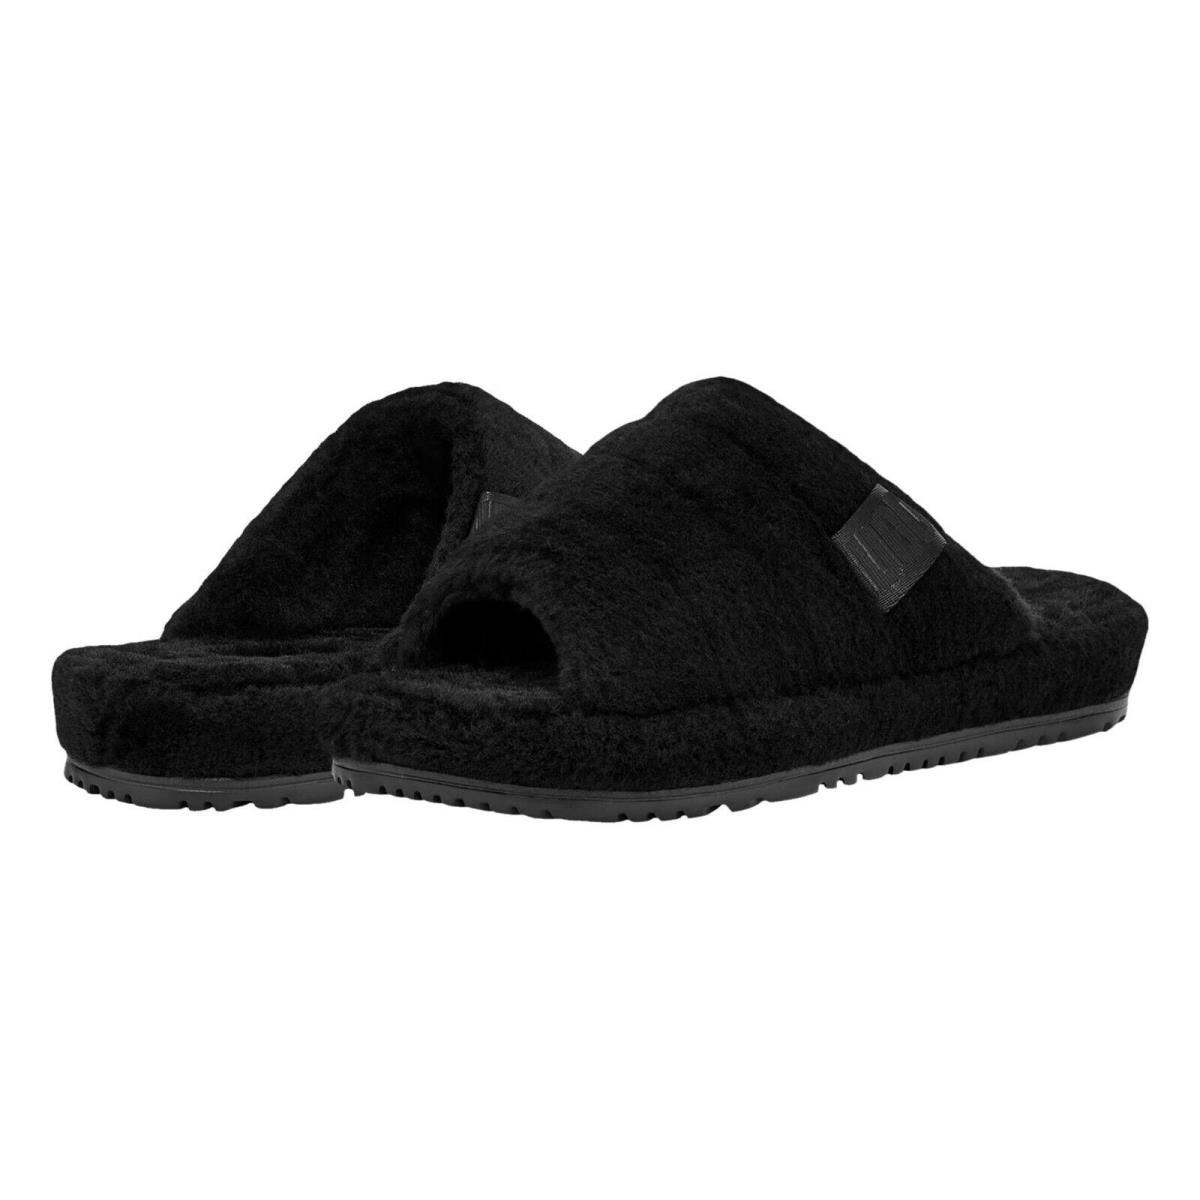 Men`s Ugg Brand Soft Fluff You Slide Slip on Casual Slipper Shoes Black